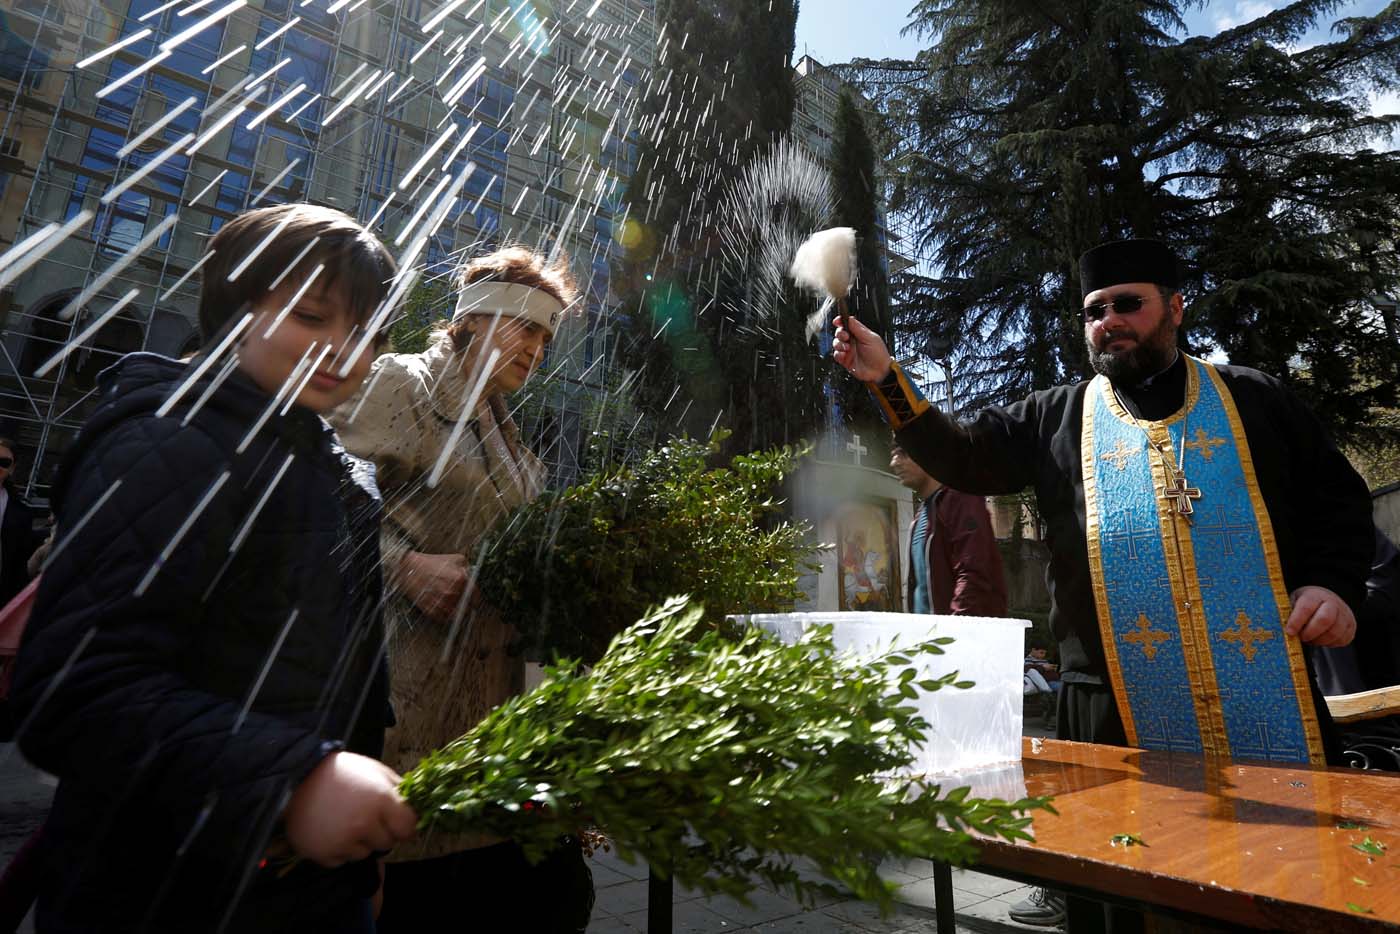 A priest sprays holy water during the Palm Sunday service in Tbilisi, Georgia April 9, 2017. REUTERS/David Mdzinarishvili